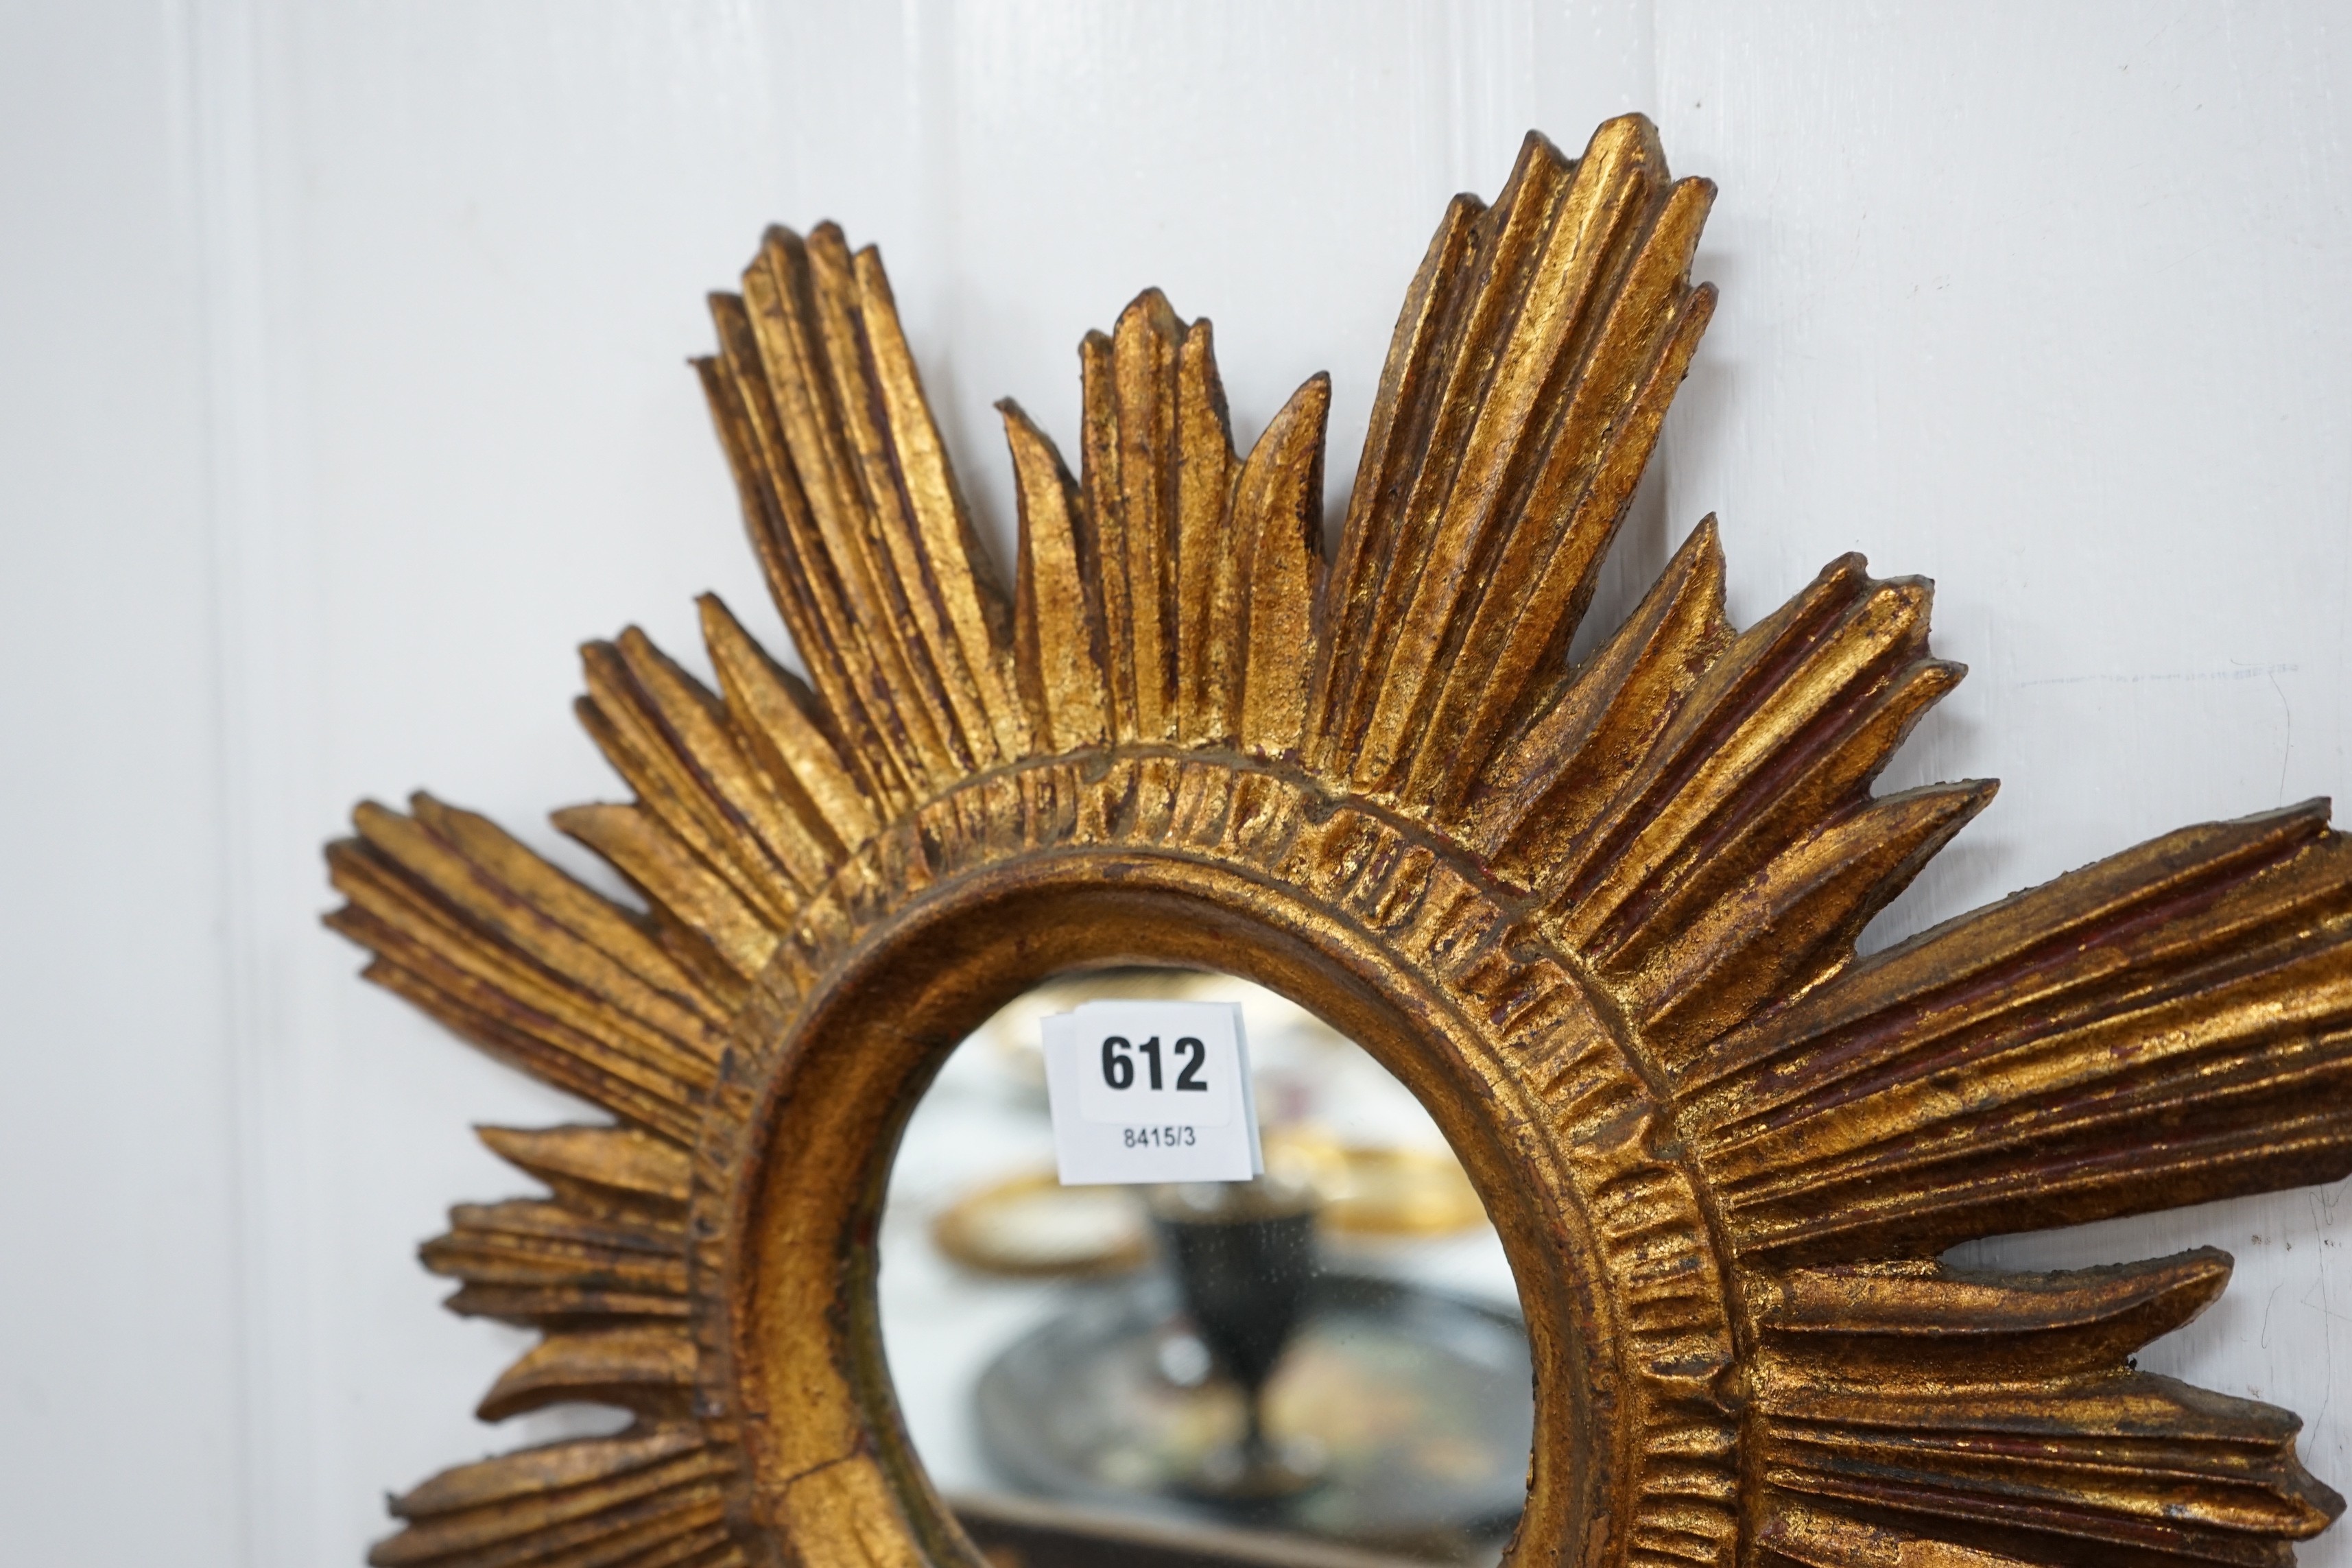 A gilt star-burst wall mirror, 47cm